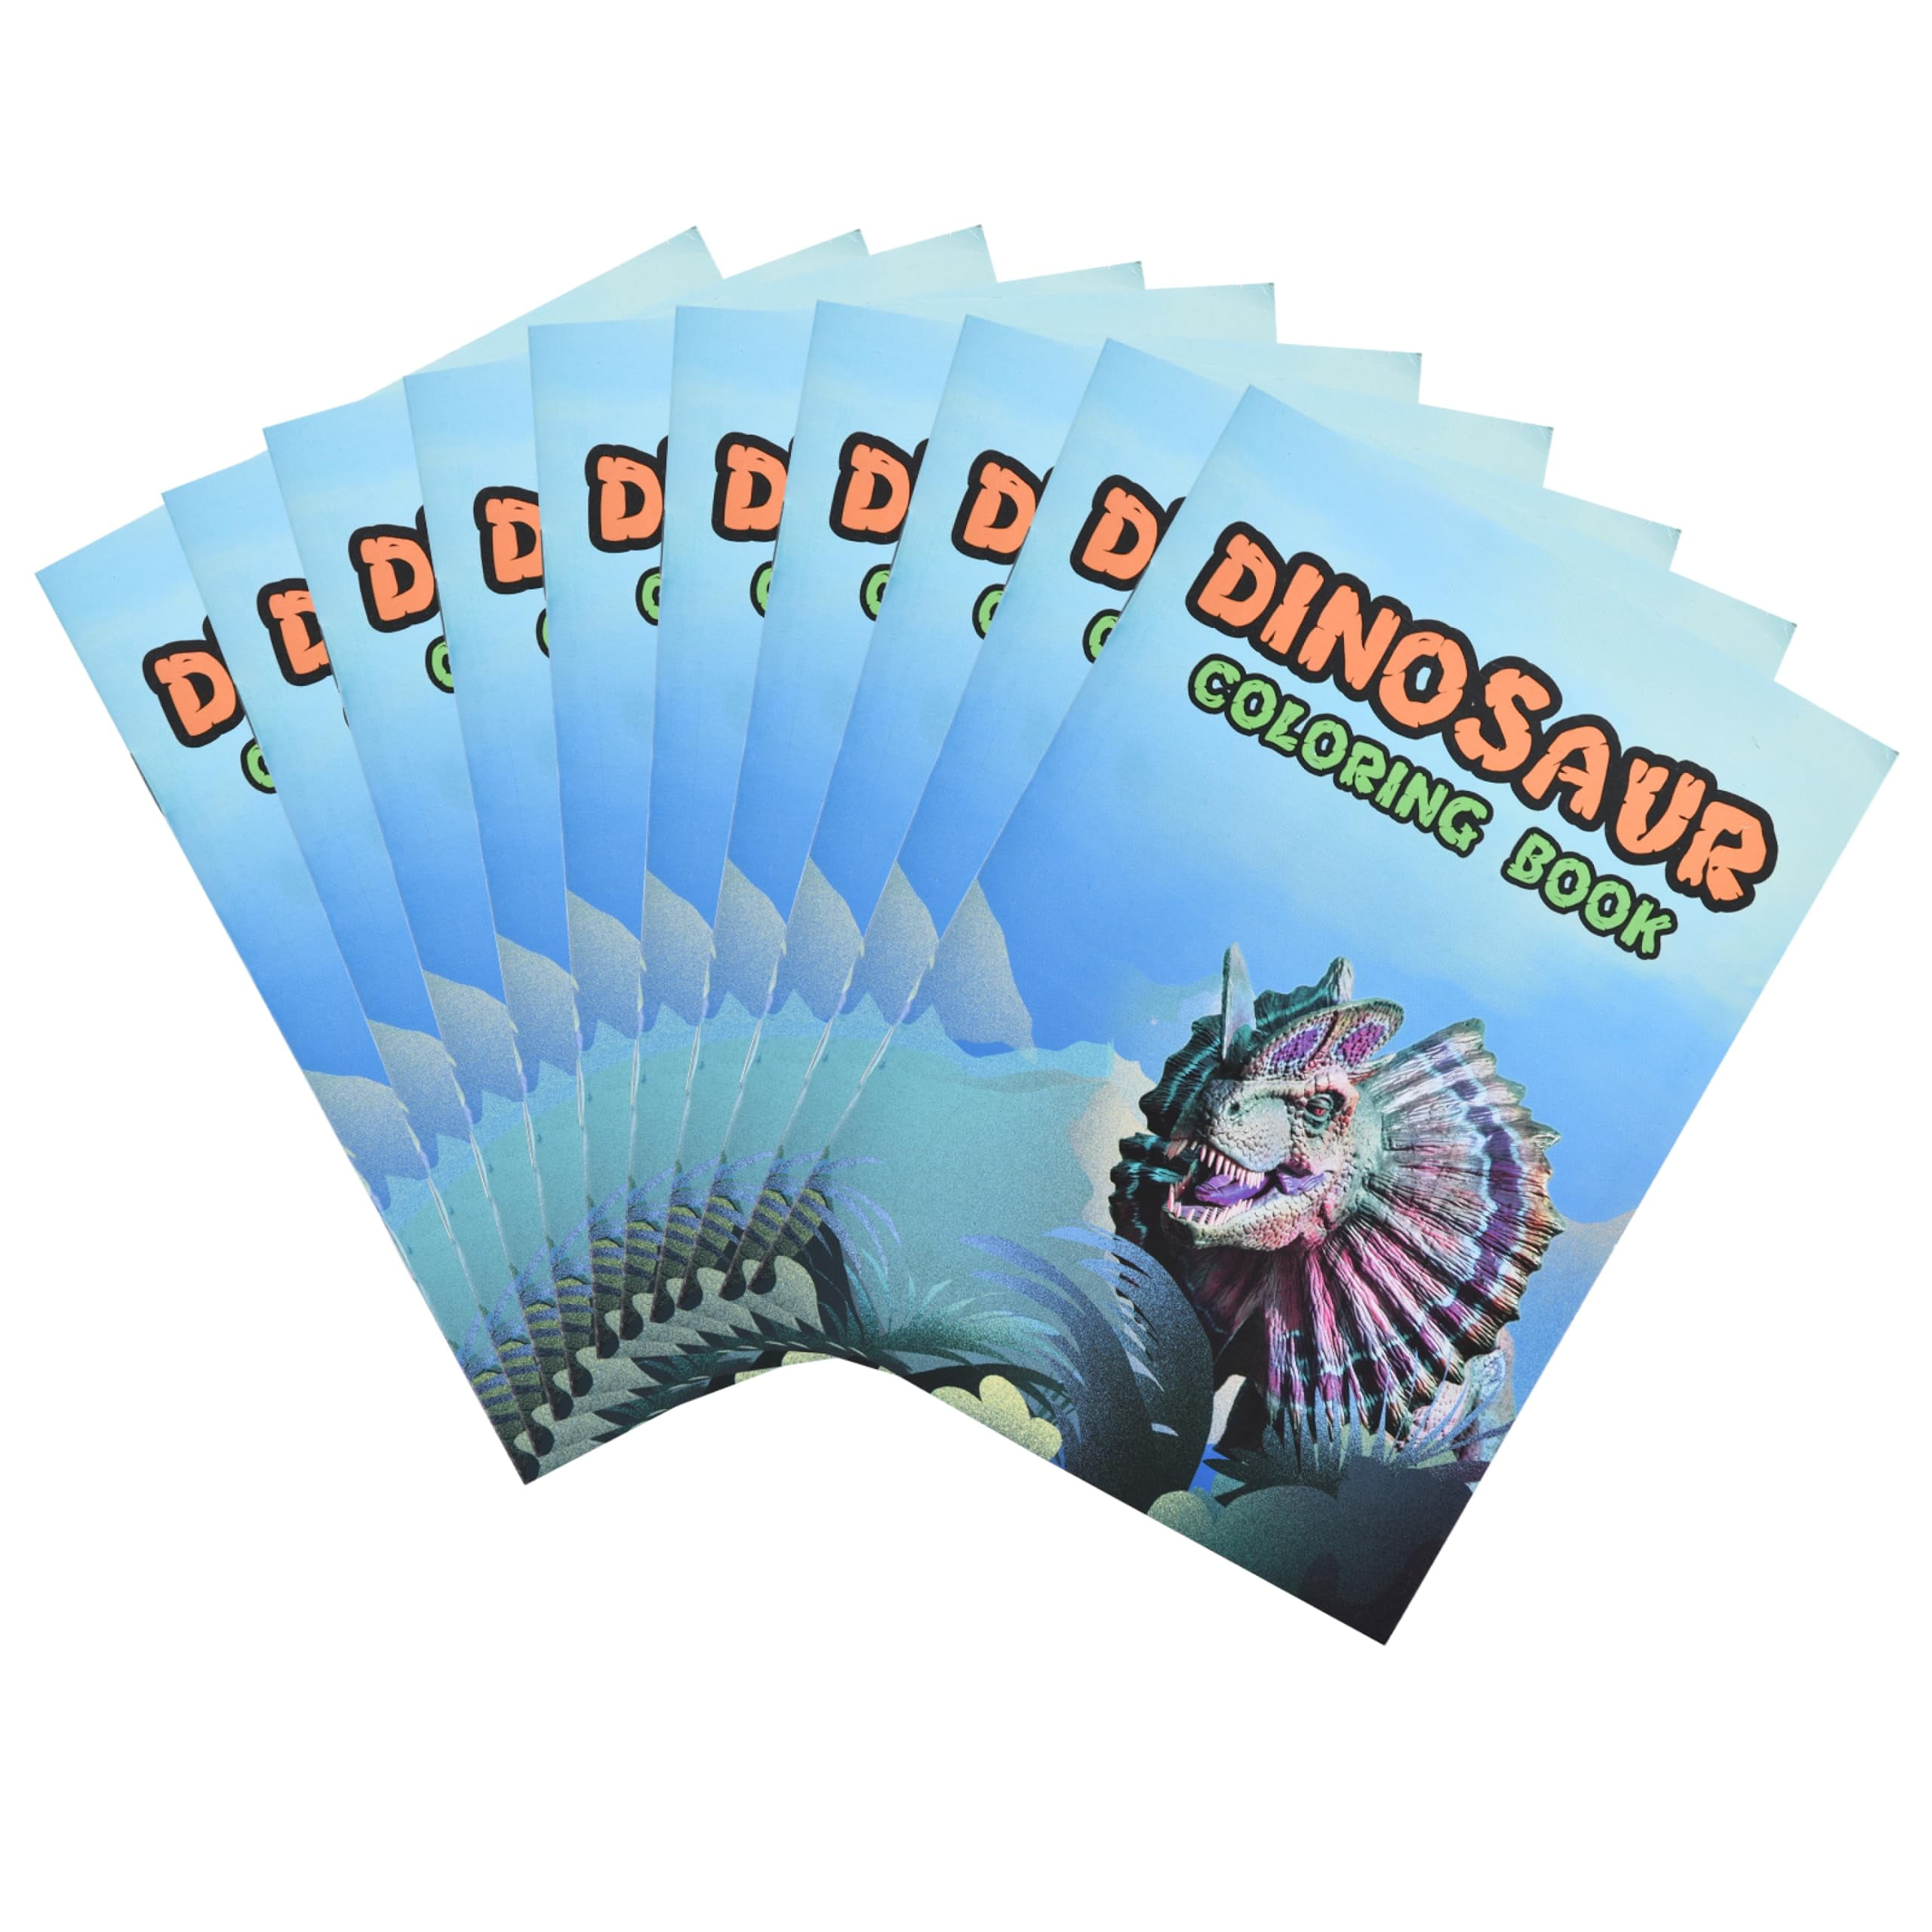 Mini Dinosaur Coloring Books for Kids Party Favor Set - Bulk Pack